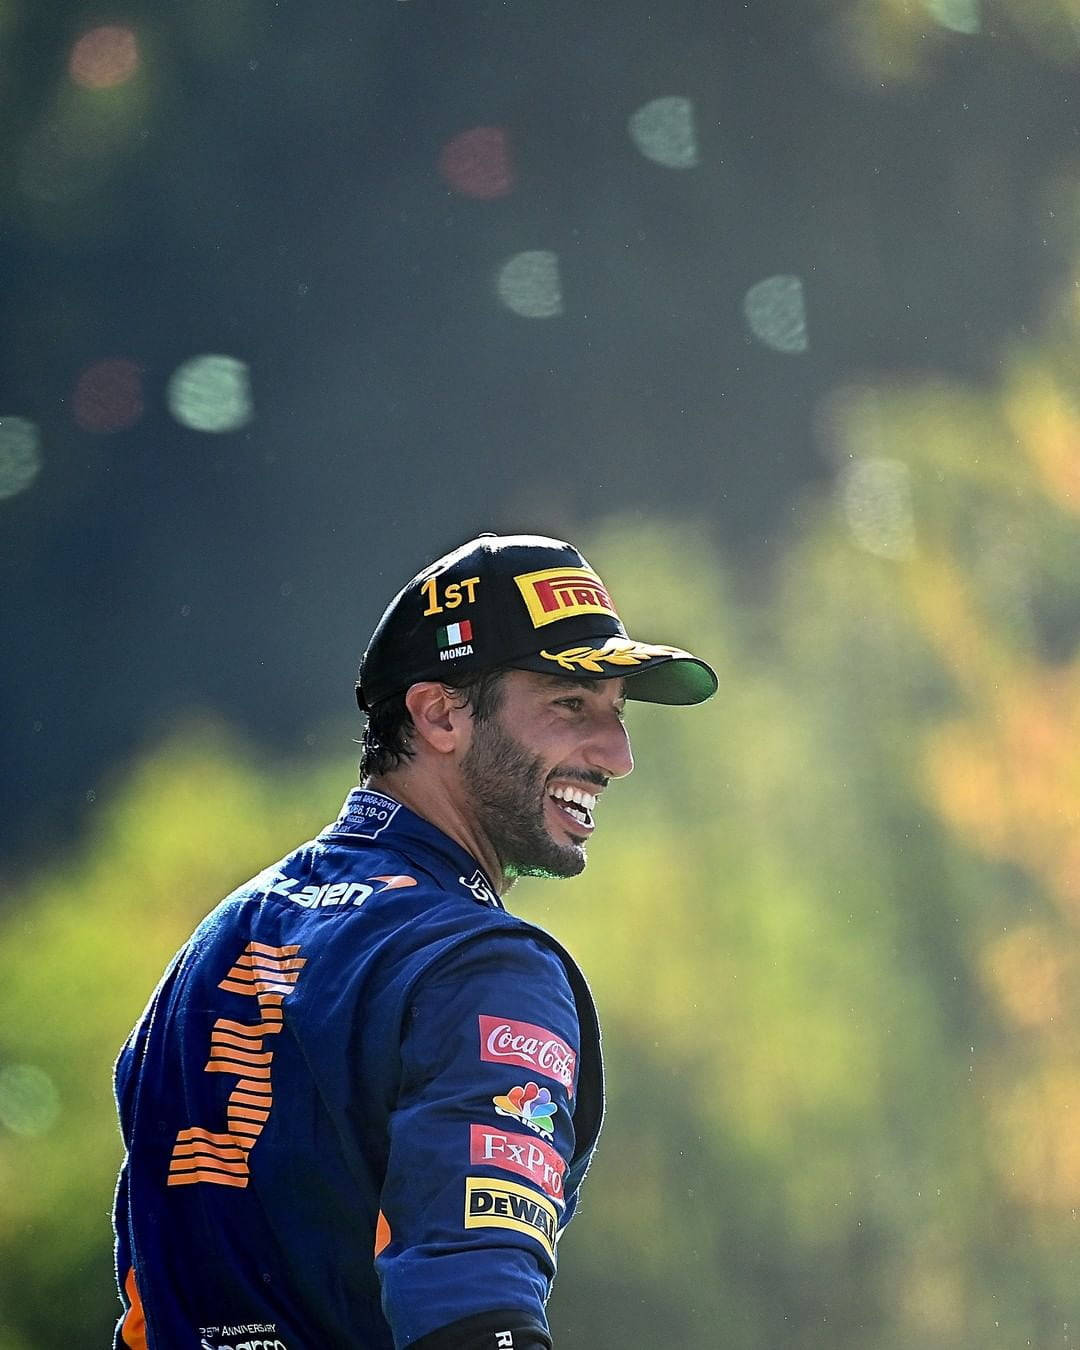 Daniel Ricciardo Gazes Off To The Side On The Race Track Background